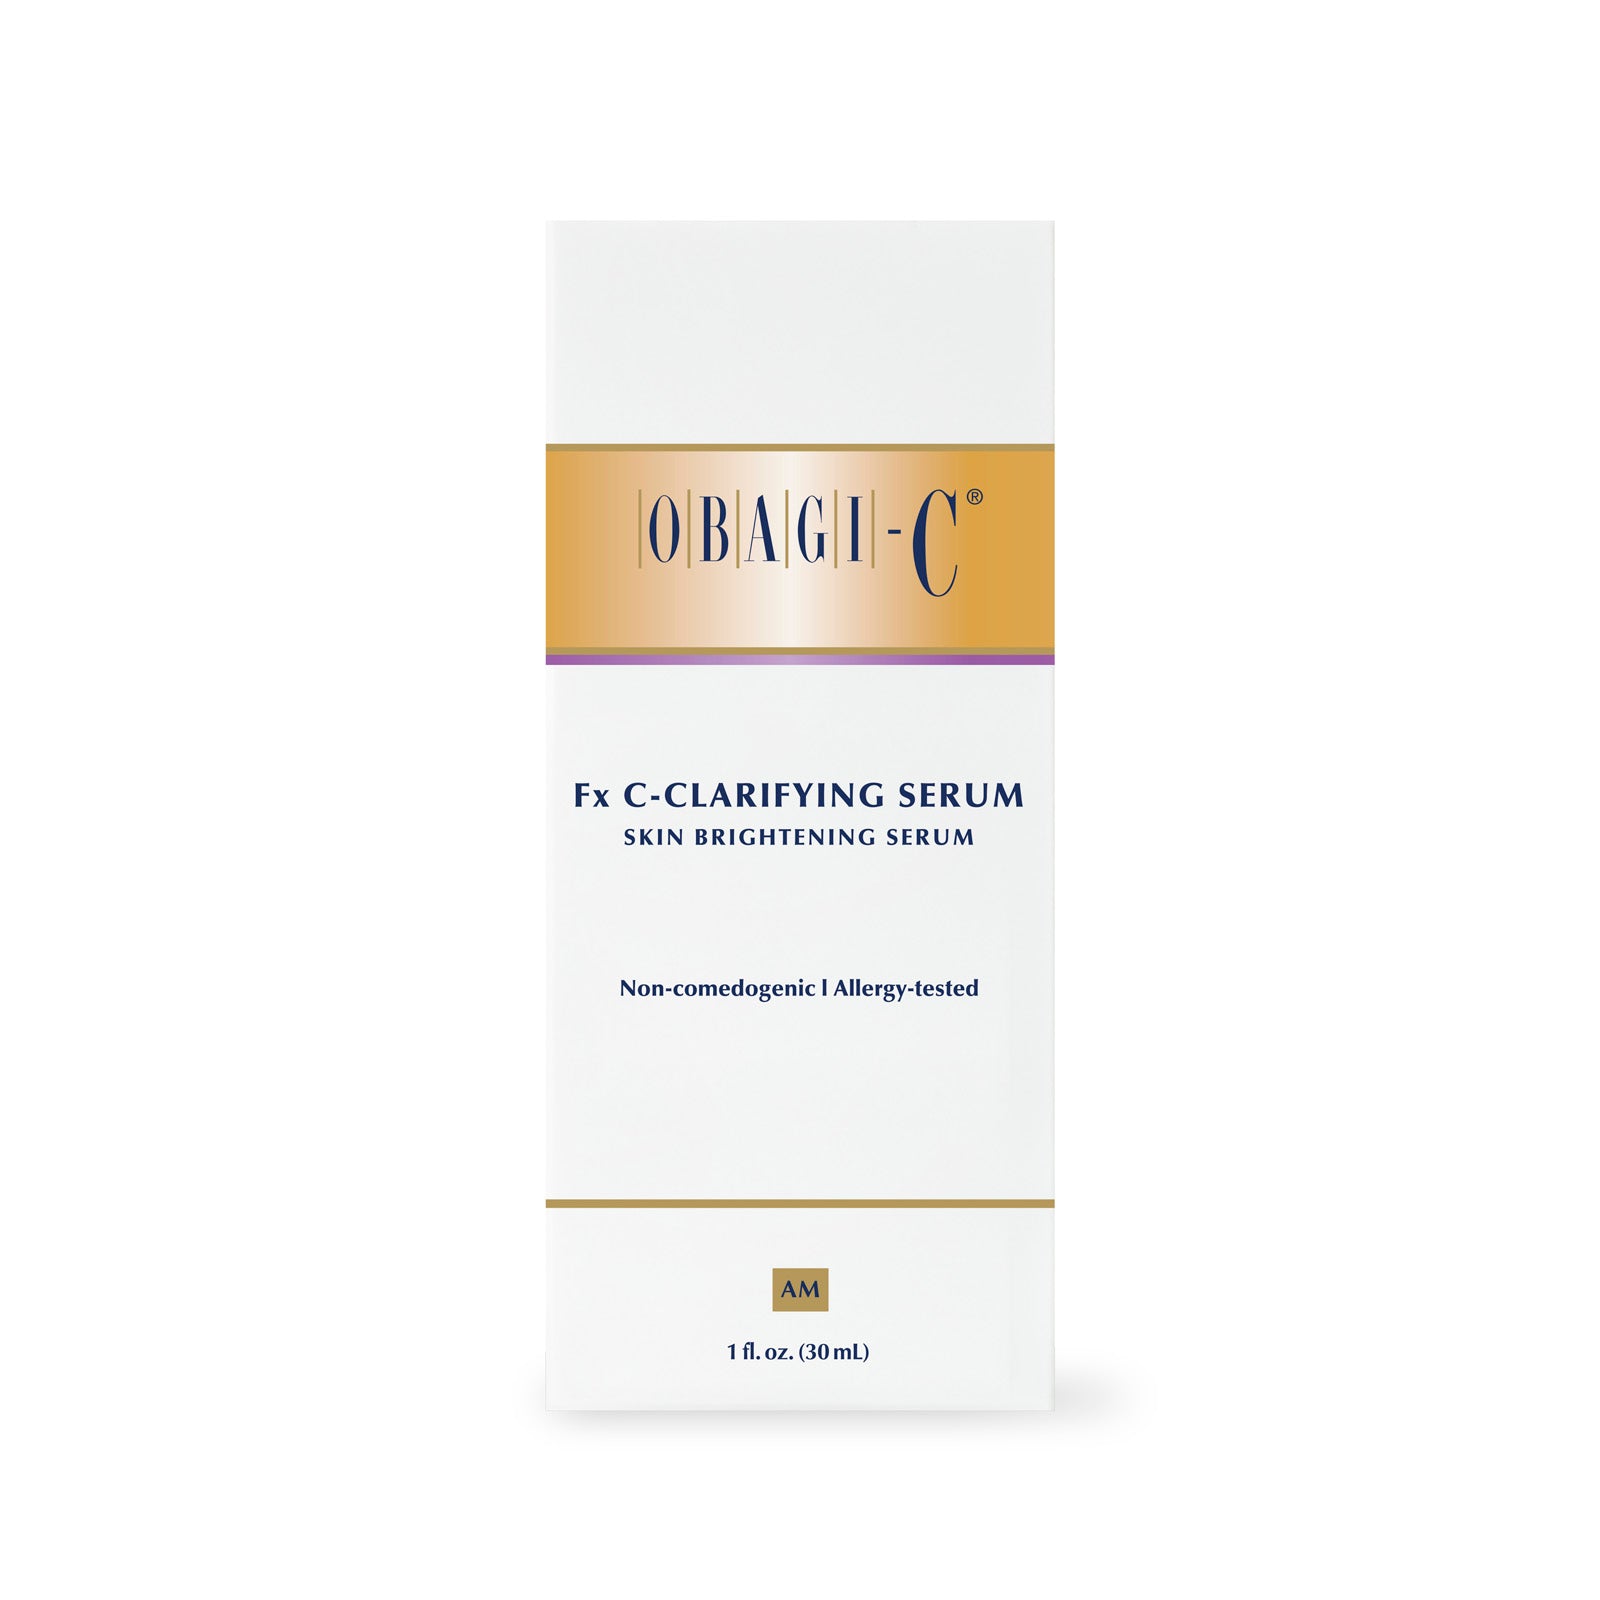 Obagi-C Fx C-Clarifying Serum 1.0 fl oz Skin-brightening serum with Vitamin C - Beauty By Vianna